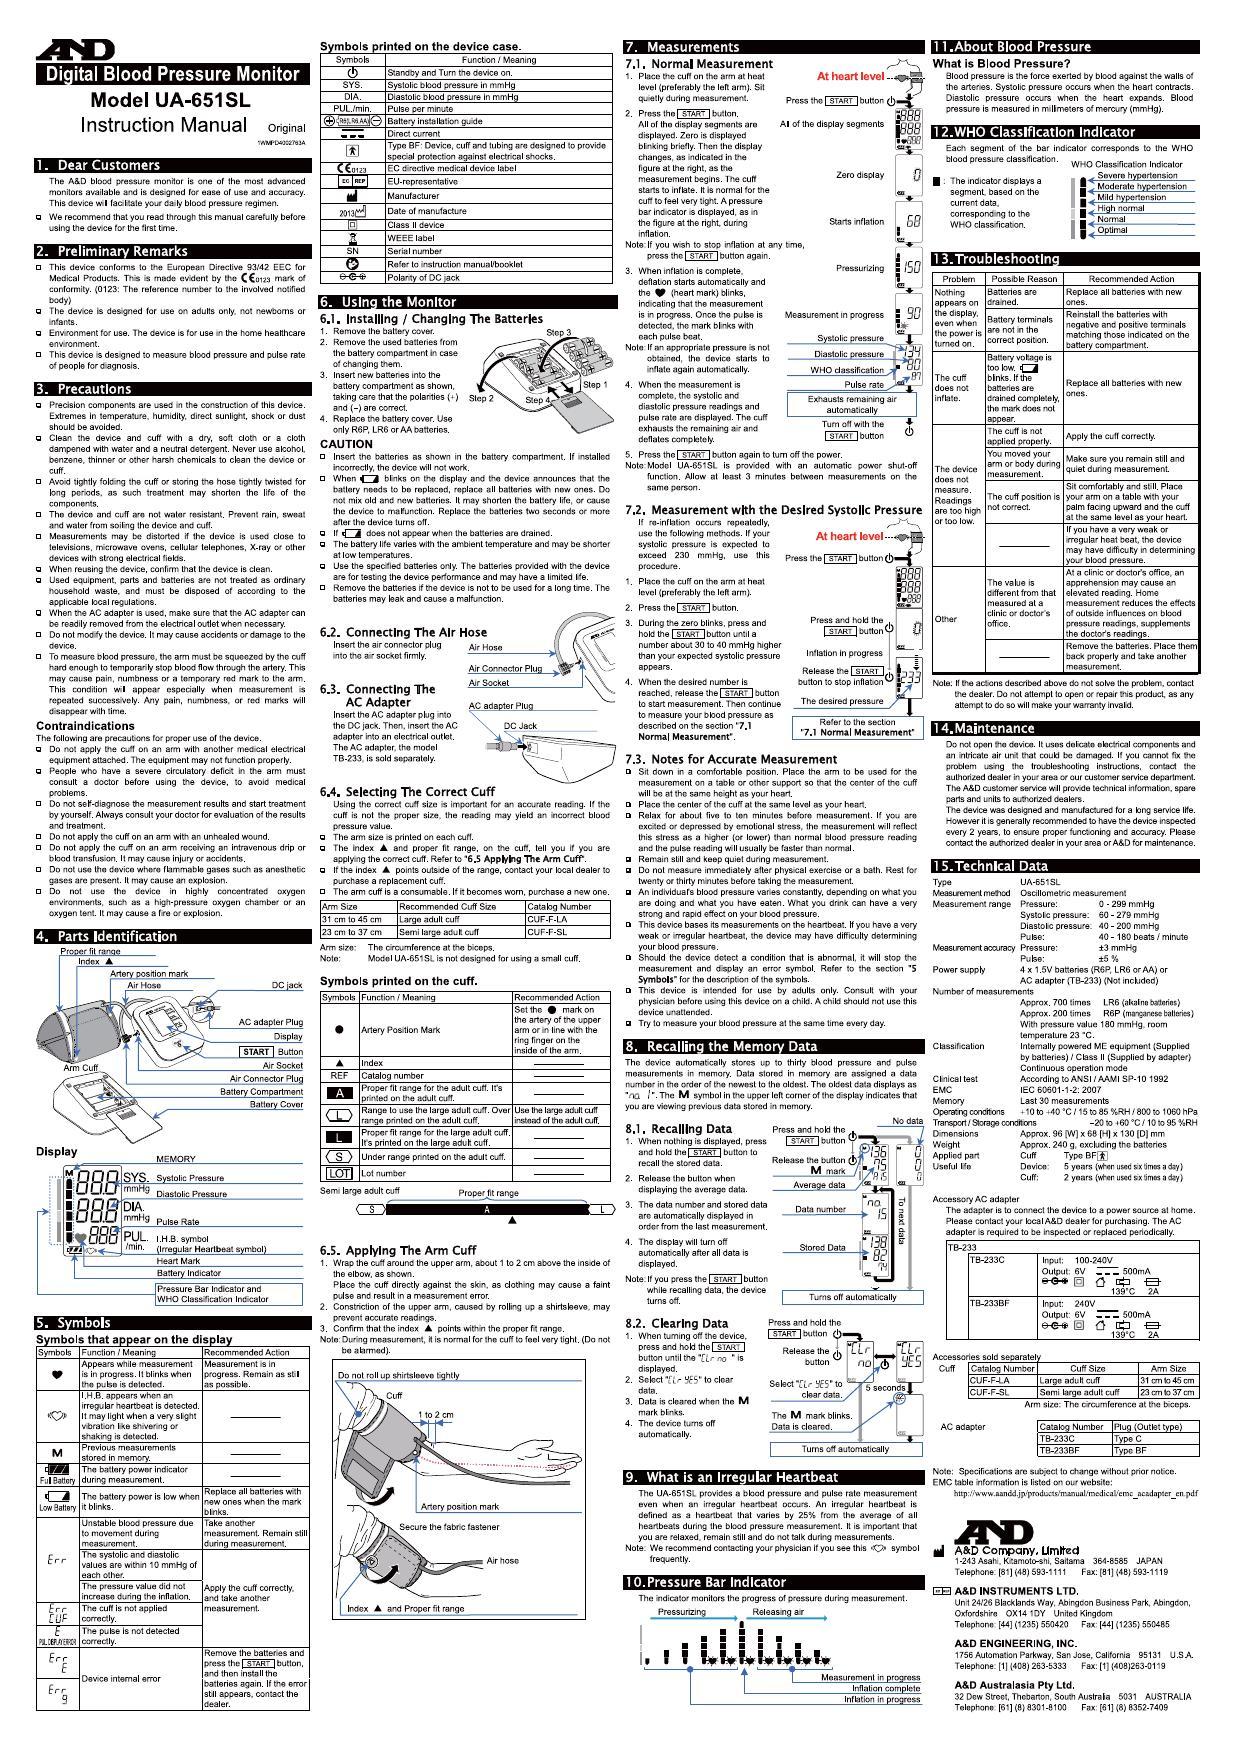 instruction-manual-for-ua-651sl-digital-blood-pressure-monitor.pdf